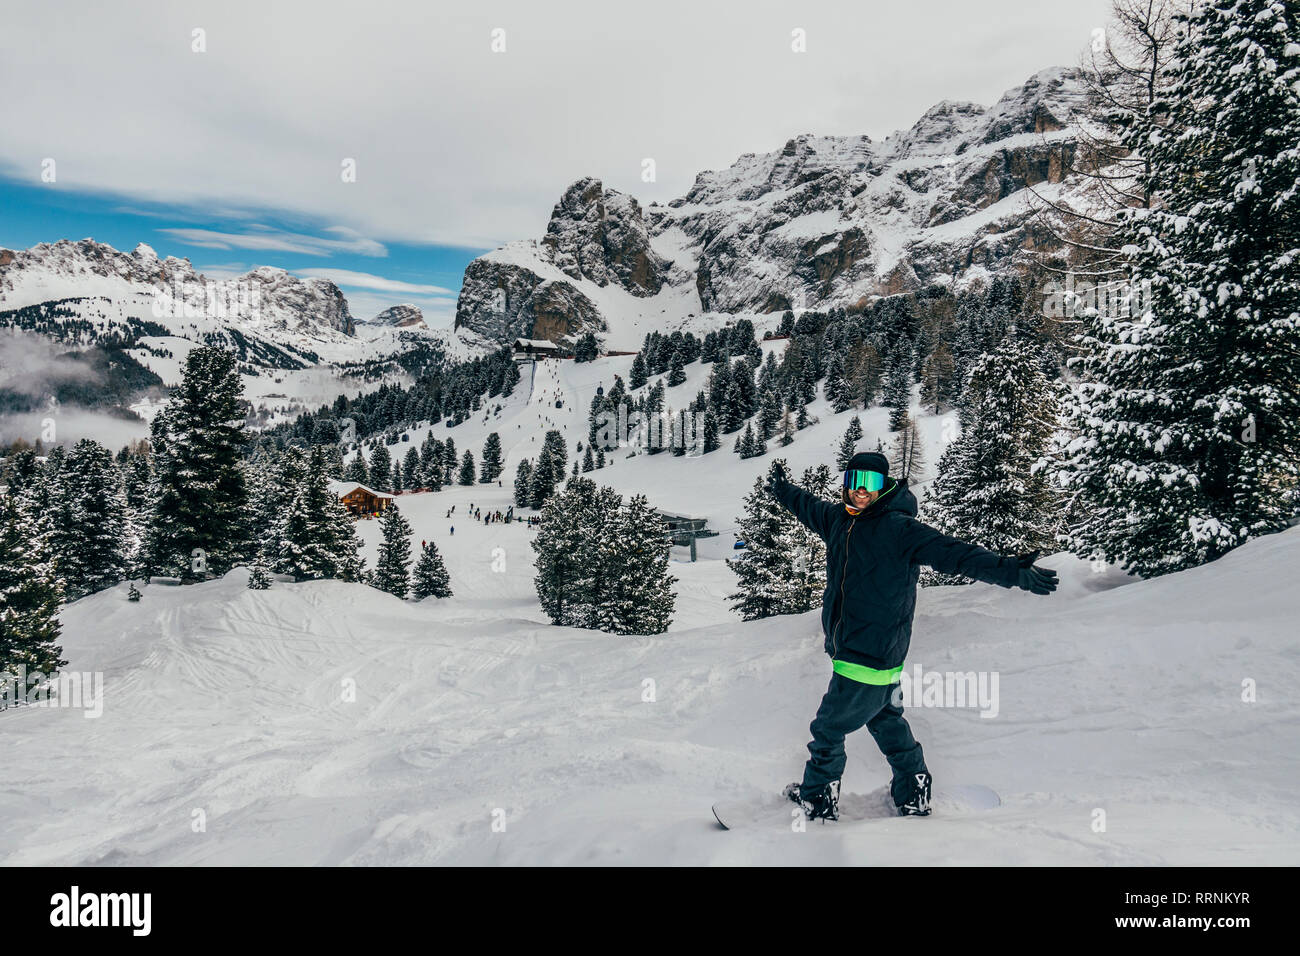 Portrait exuberant snowboarder on snowy ski slope, Dolomites, Italy Stock Photo